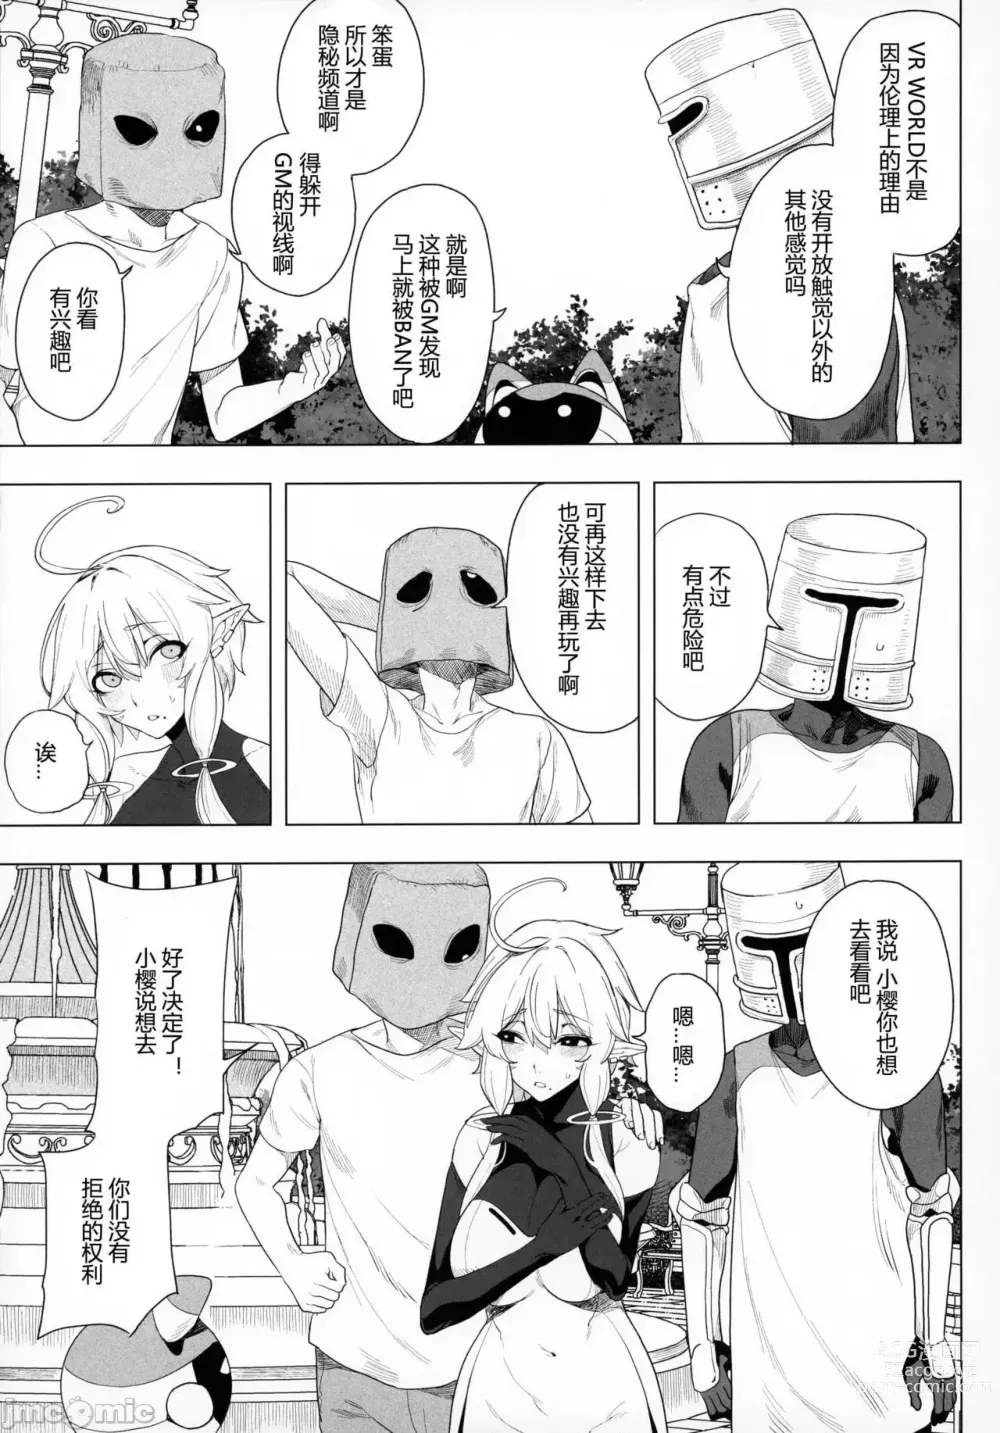 Page 7 of doujinshi 電脳姦姫 仮想空間で堕ちる少